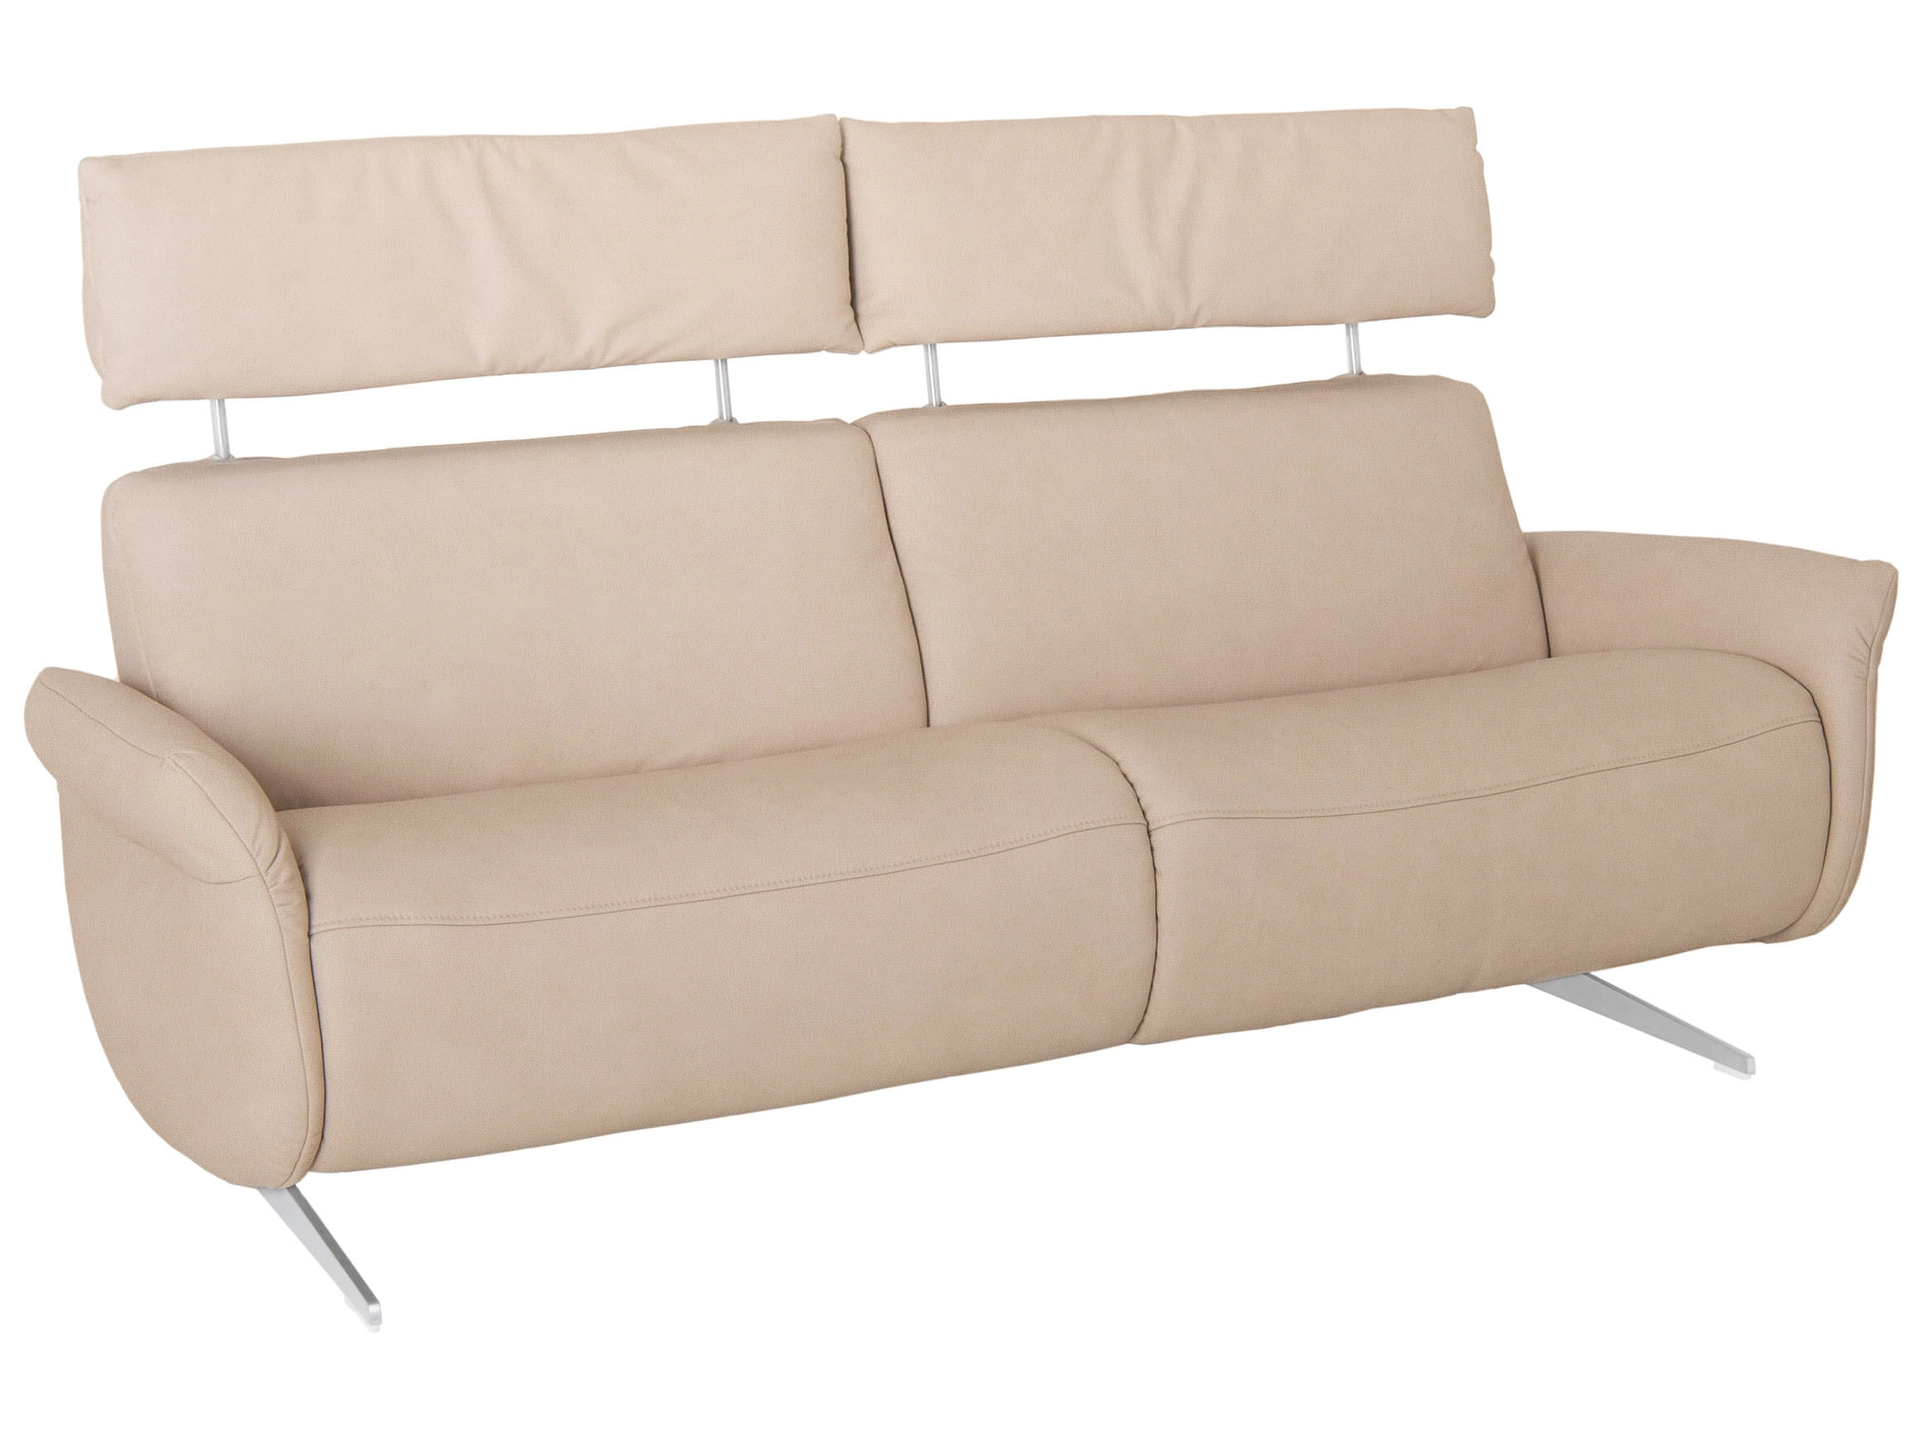 Sofa Chester Basic B: 206 cm Himolla / Farbe: Kiesel / Material: Stoff Basic